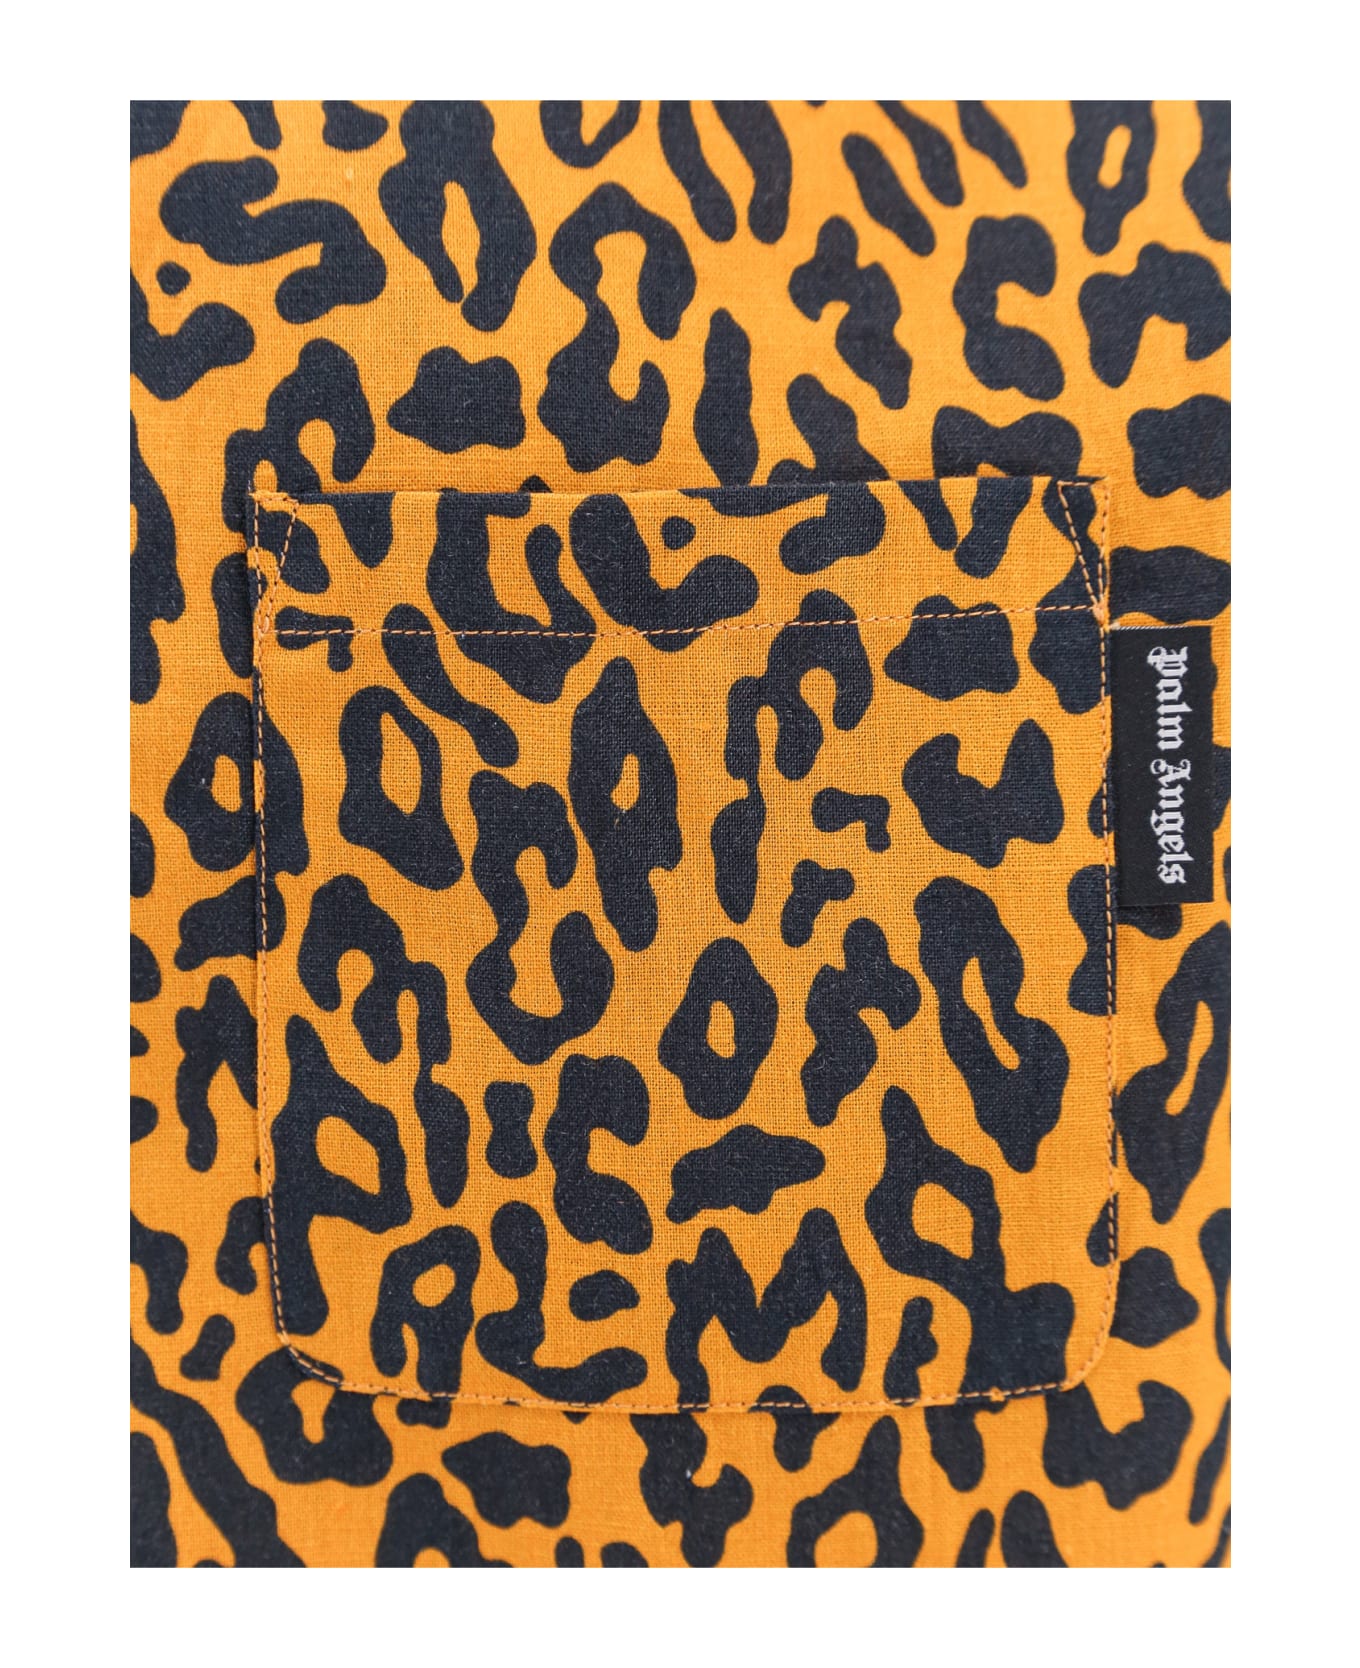 Palm Angels Cheetah Bowling Shirt - Orange